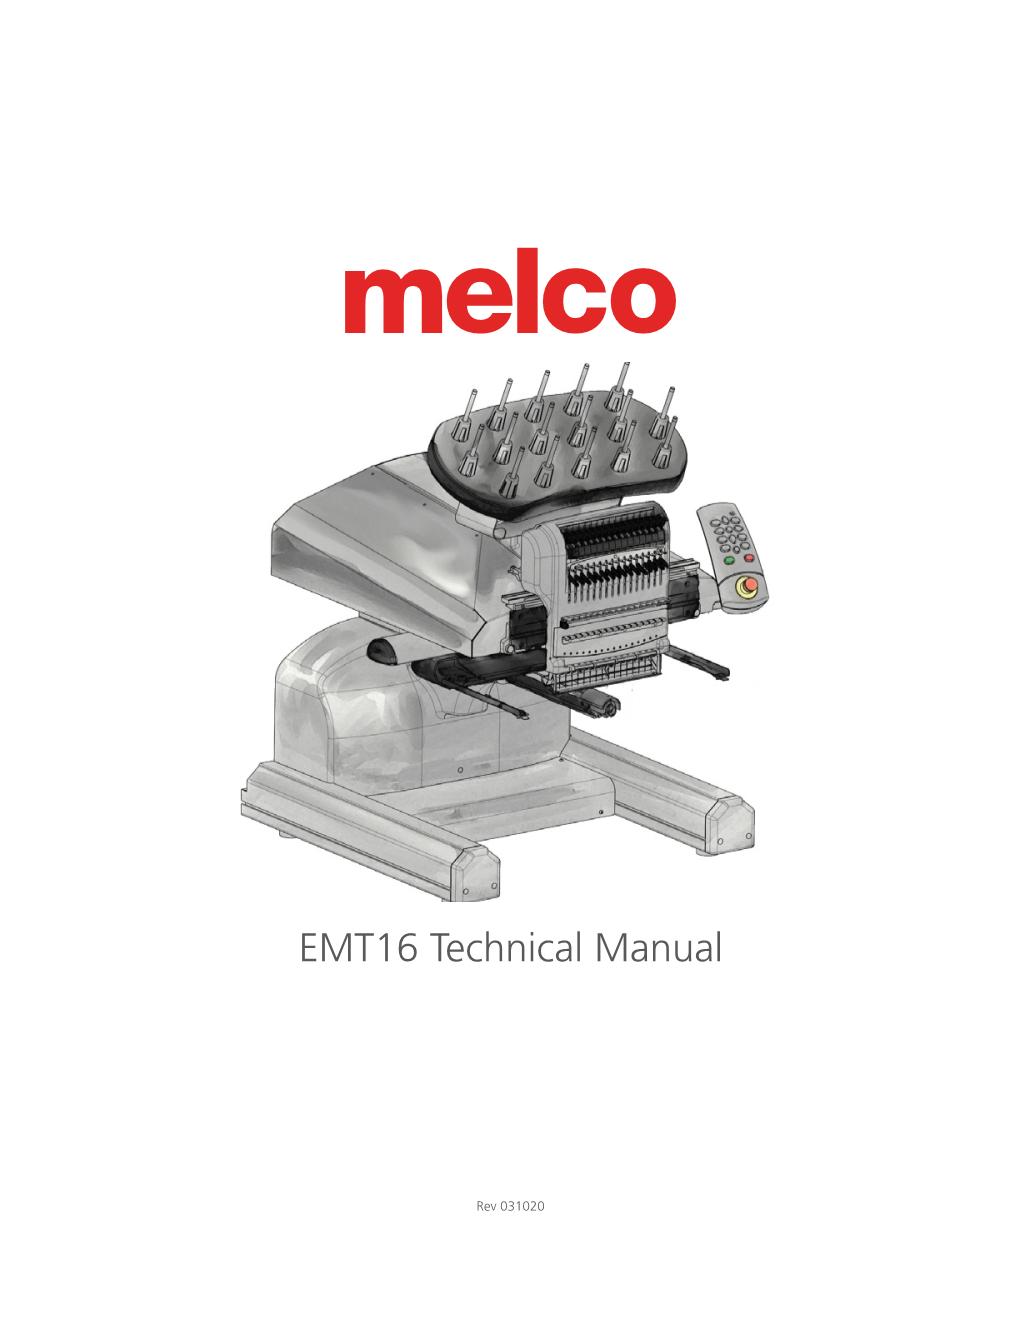 EMT16 Technical Manual